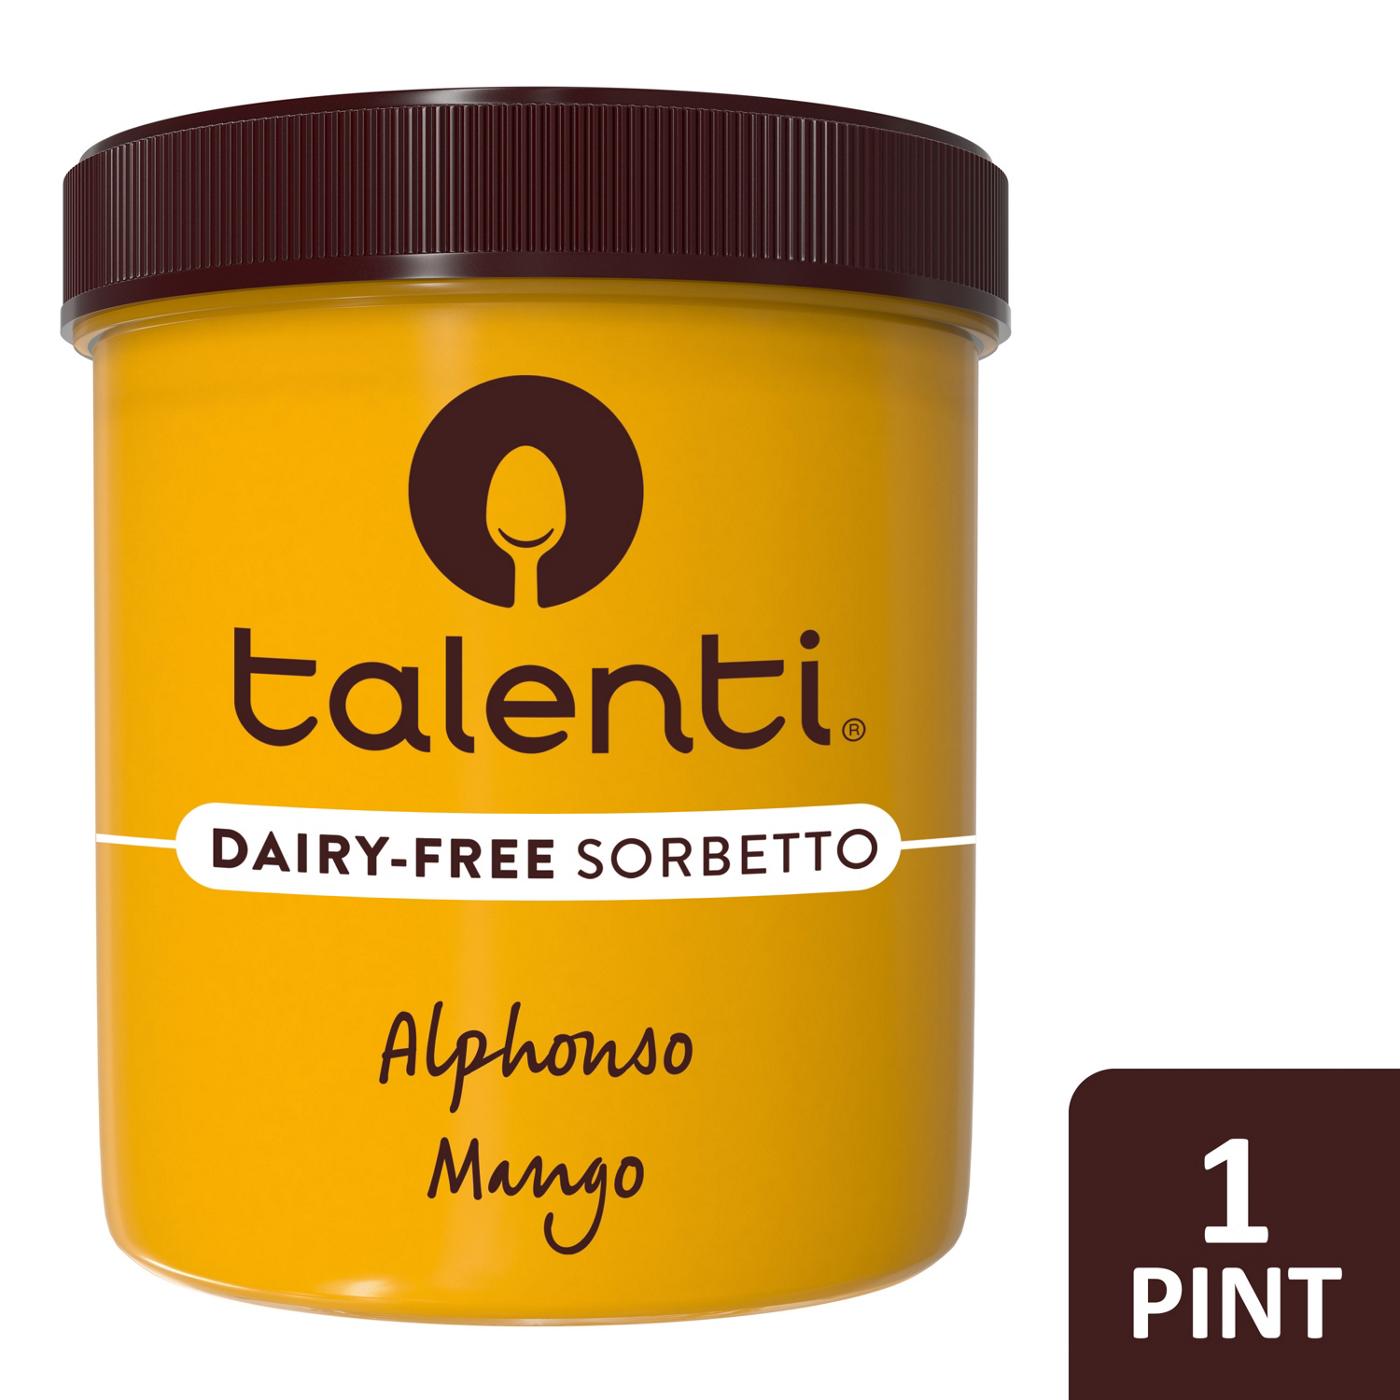 Talenti Alphonso Mango Dairy-Free Sorbetto; image 6 of 8